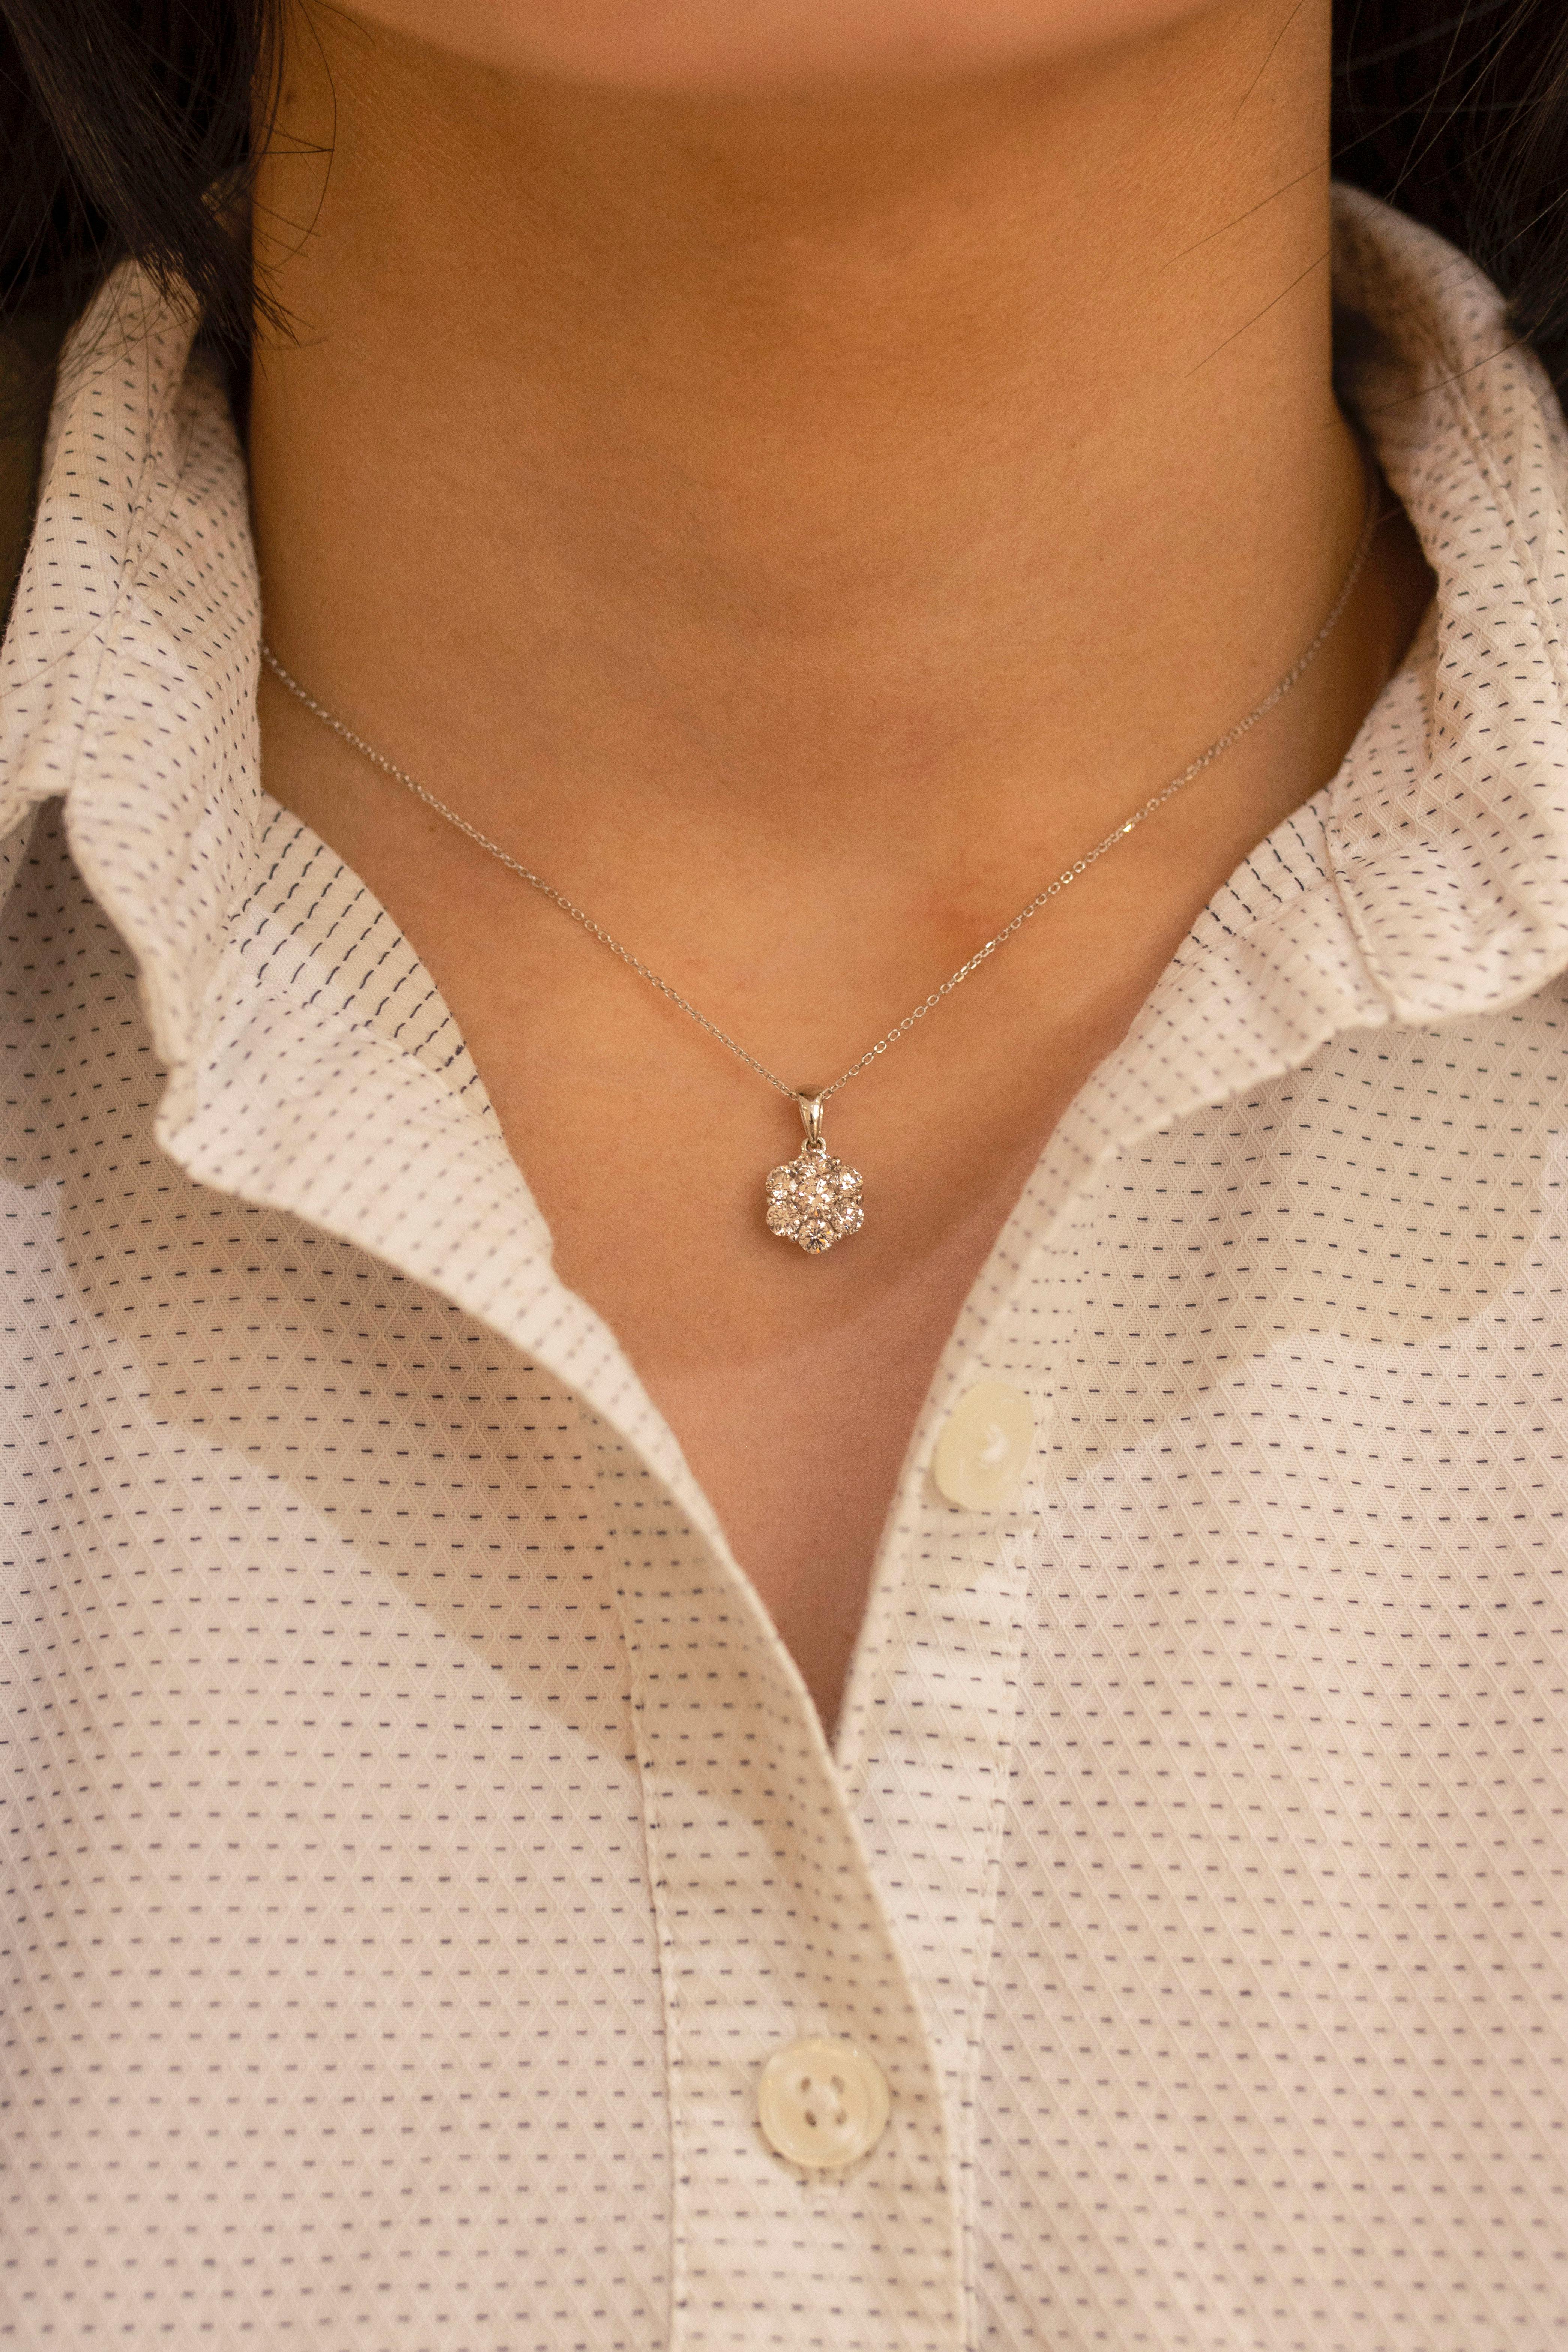 Contemporary Roman Malakov, 1 Carat Total Brilliant Round Diamond Flower Pendant Necklace For Sale